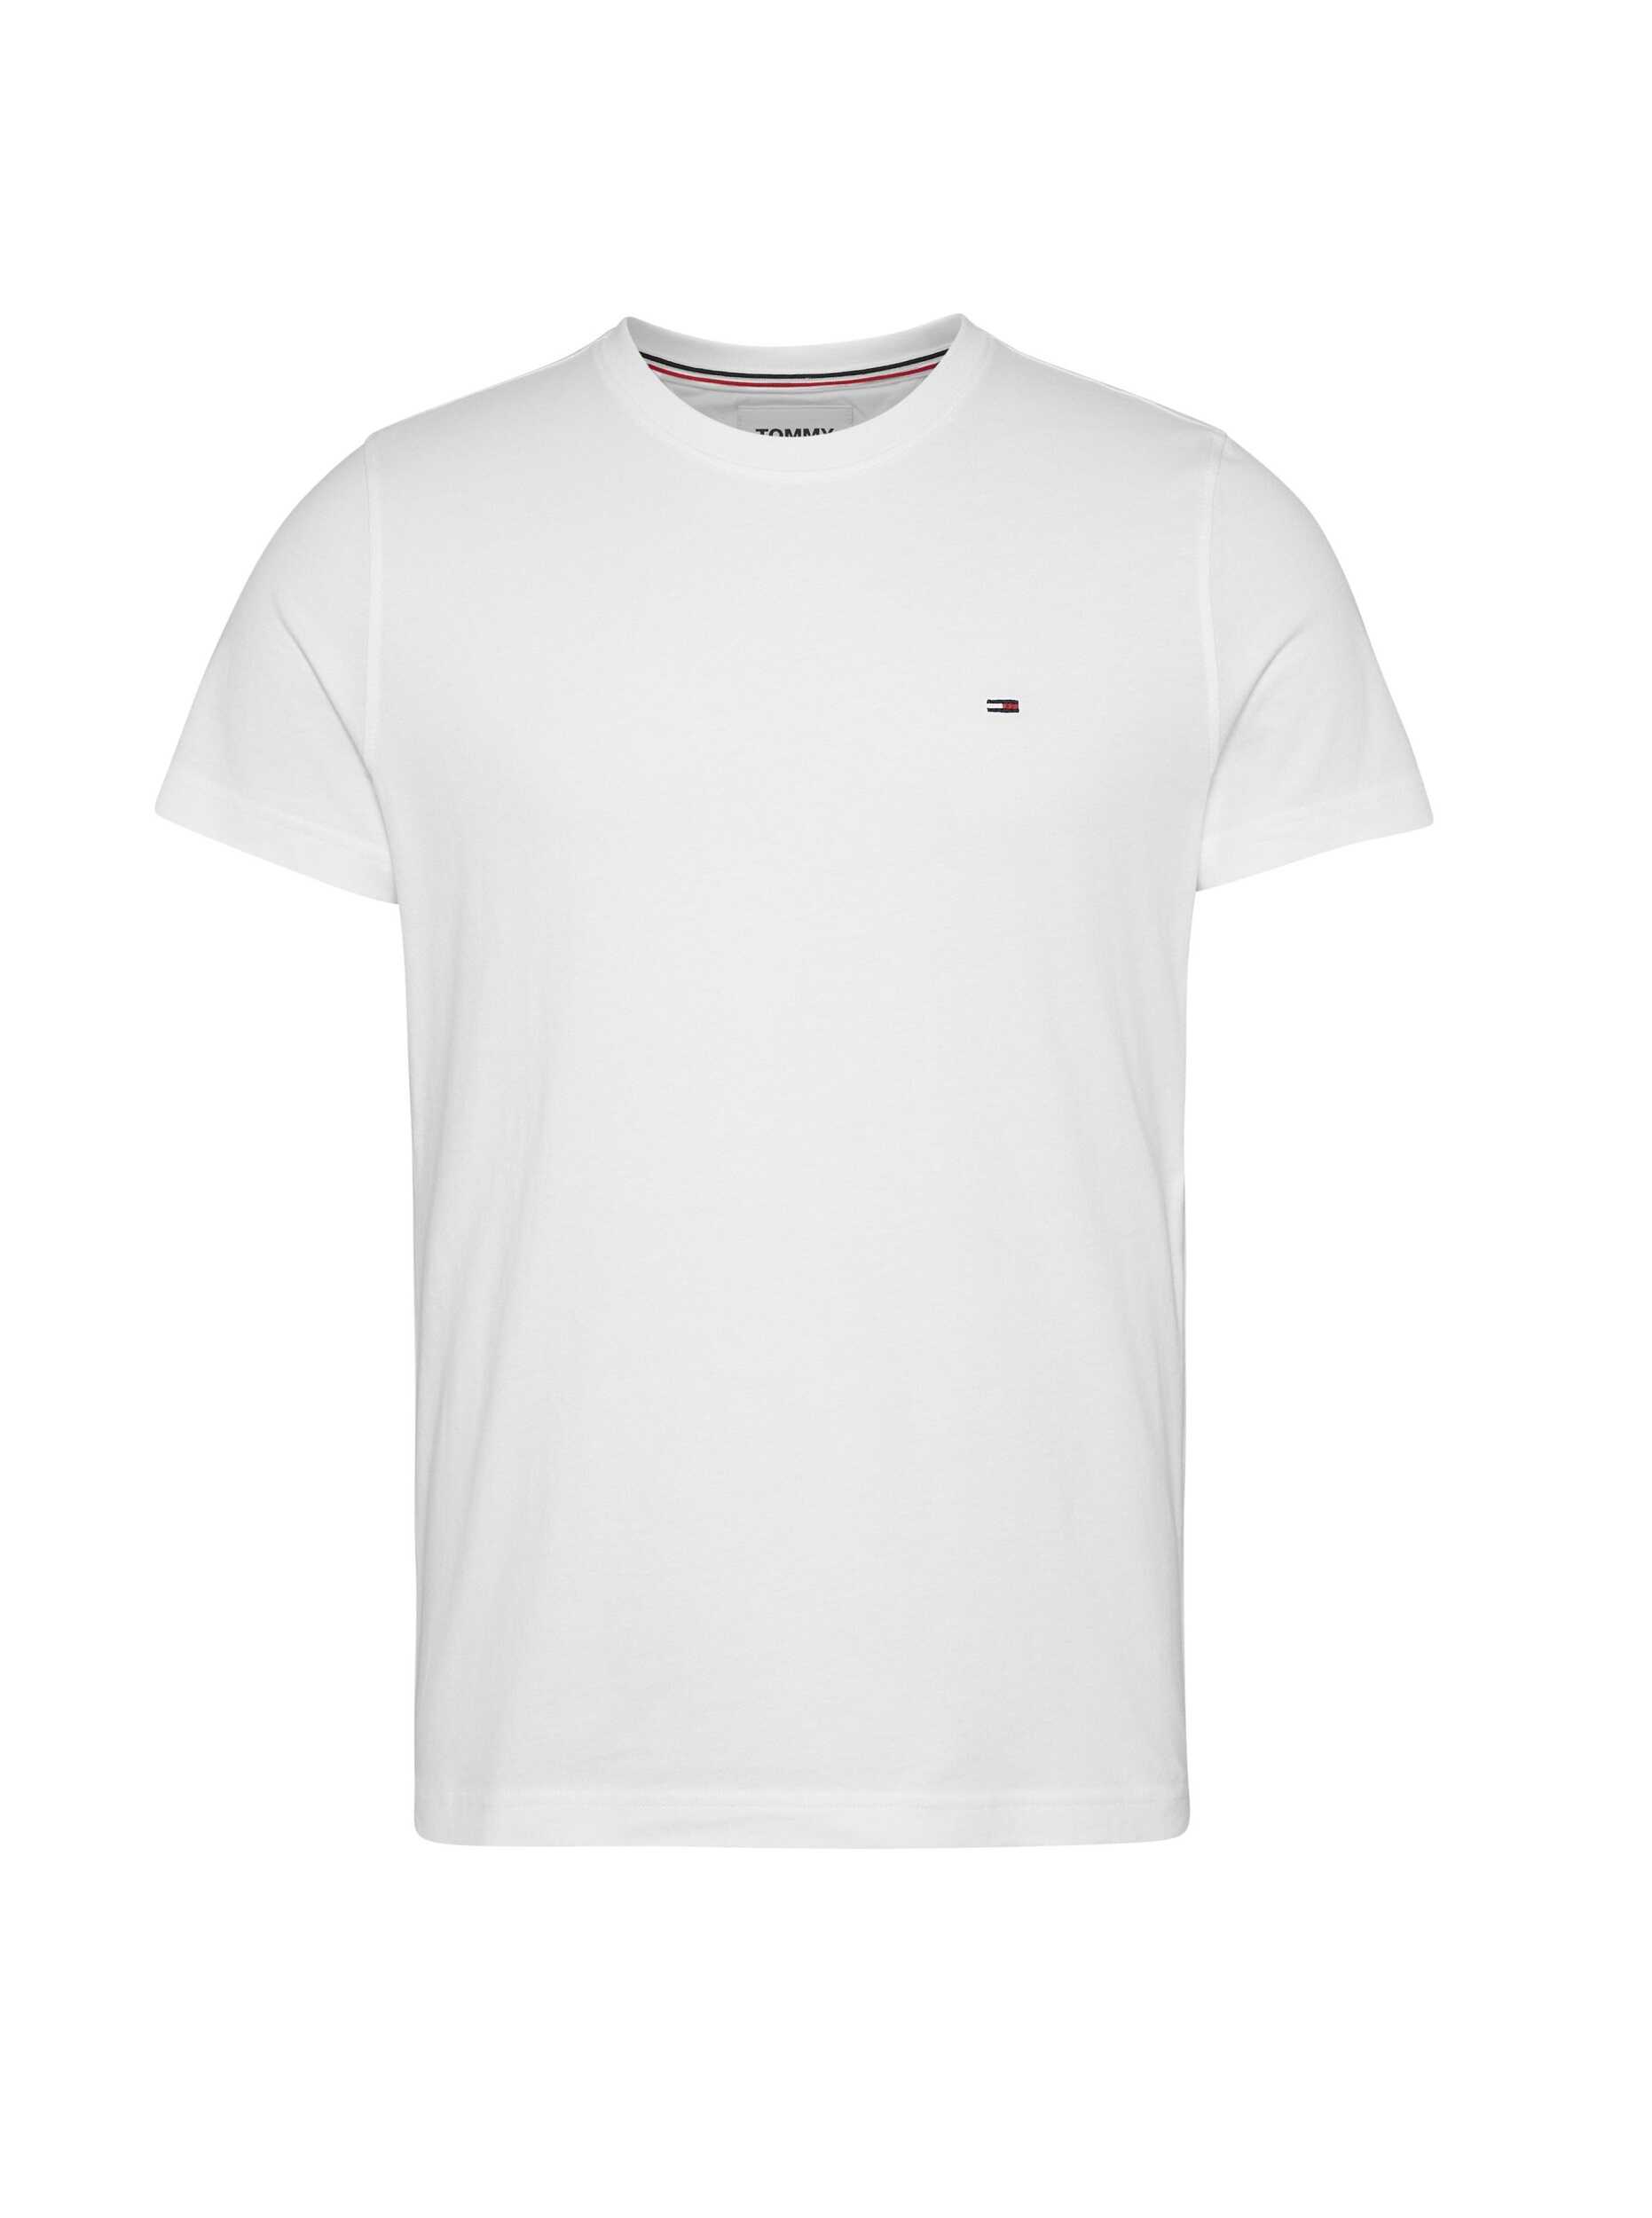 Tommy Hilfiger Original T-shirt Wit DM0DM04411